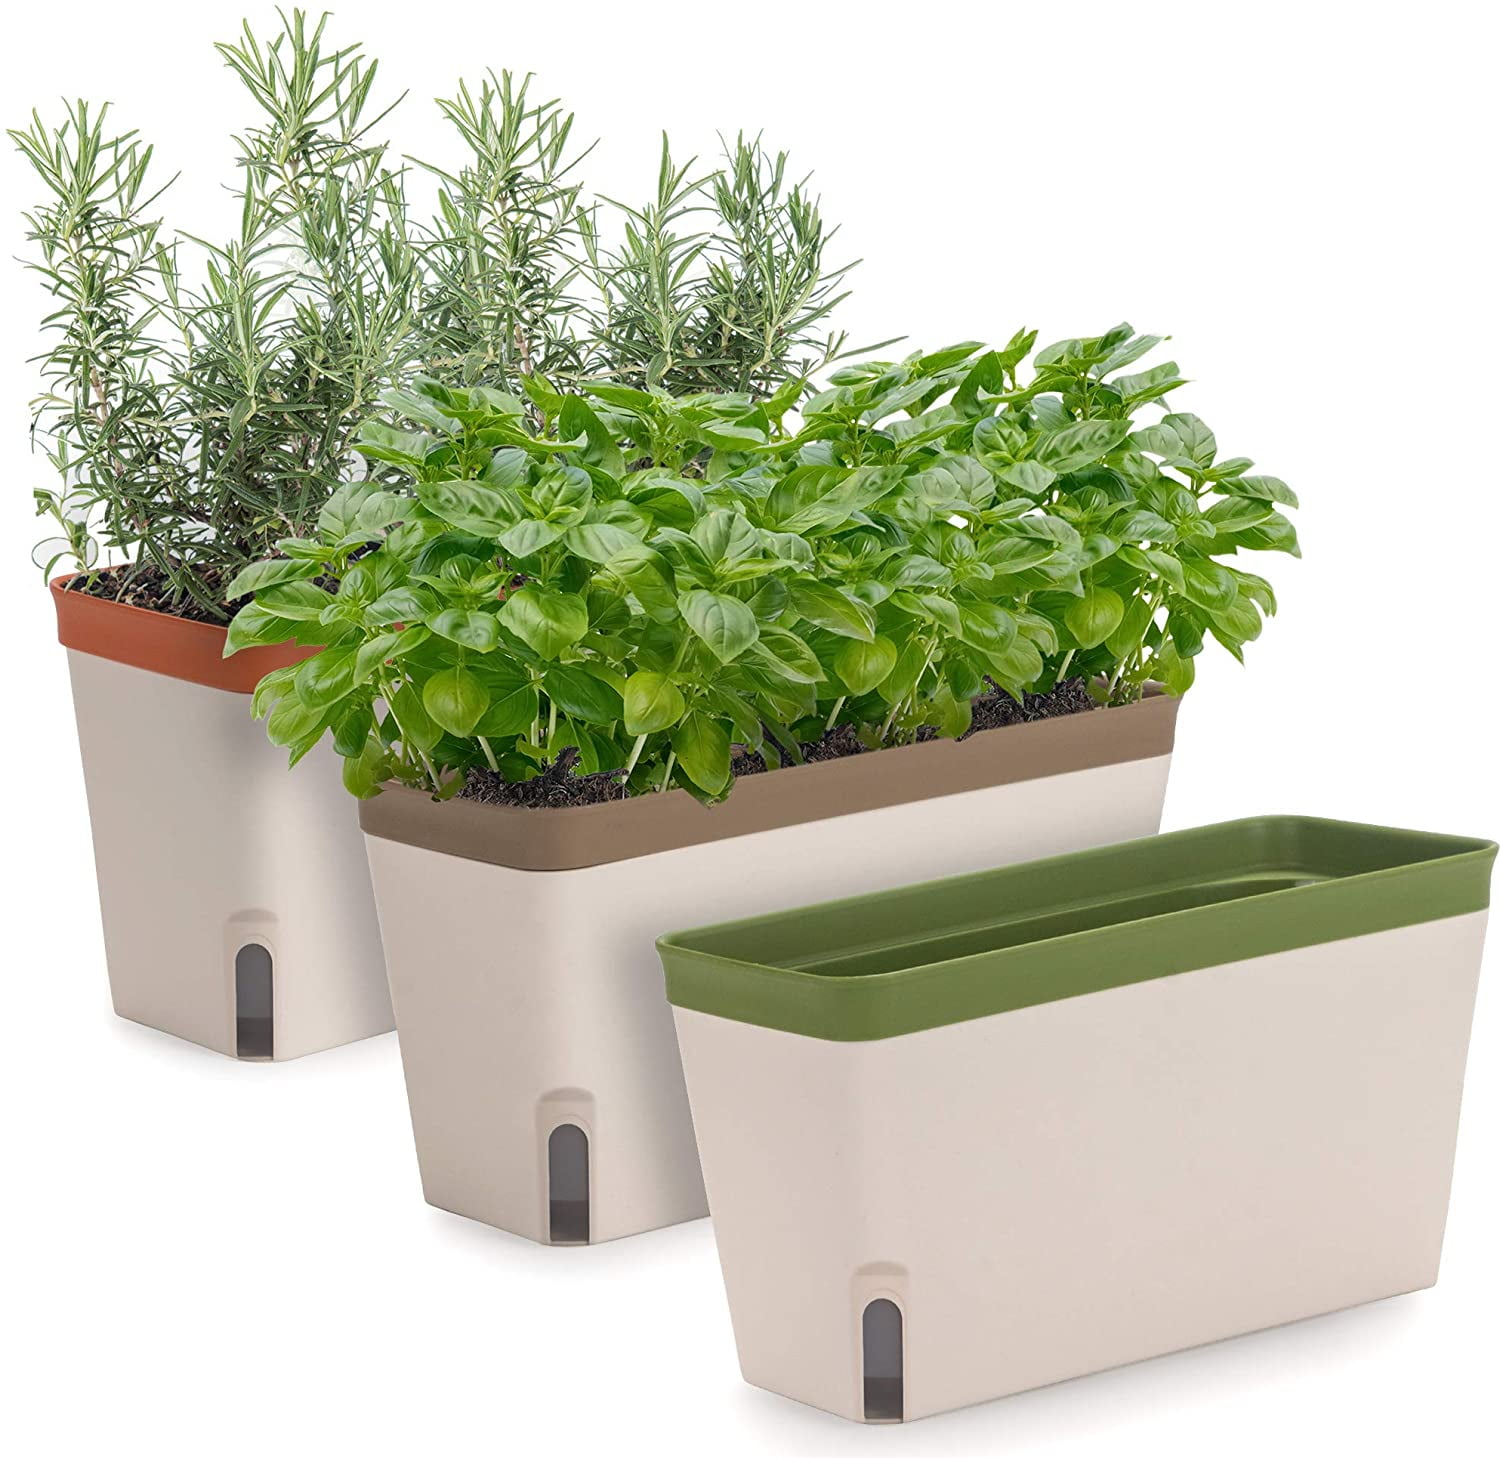 H Potter Succulent Planter Herb Plant Pots Flower Garden Window Box Indoor Outdo 